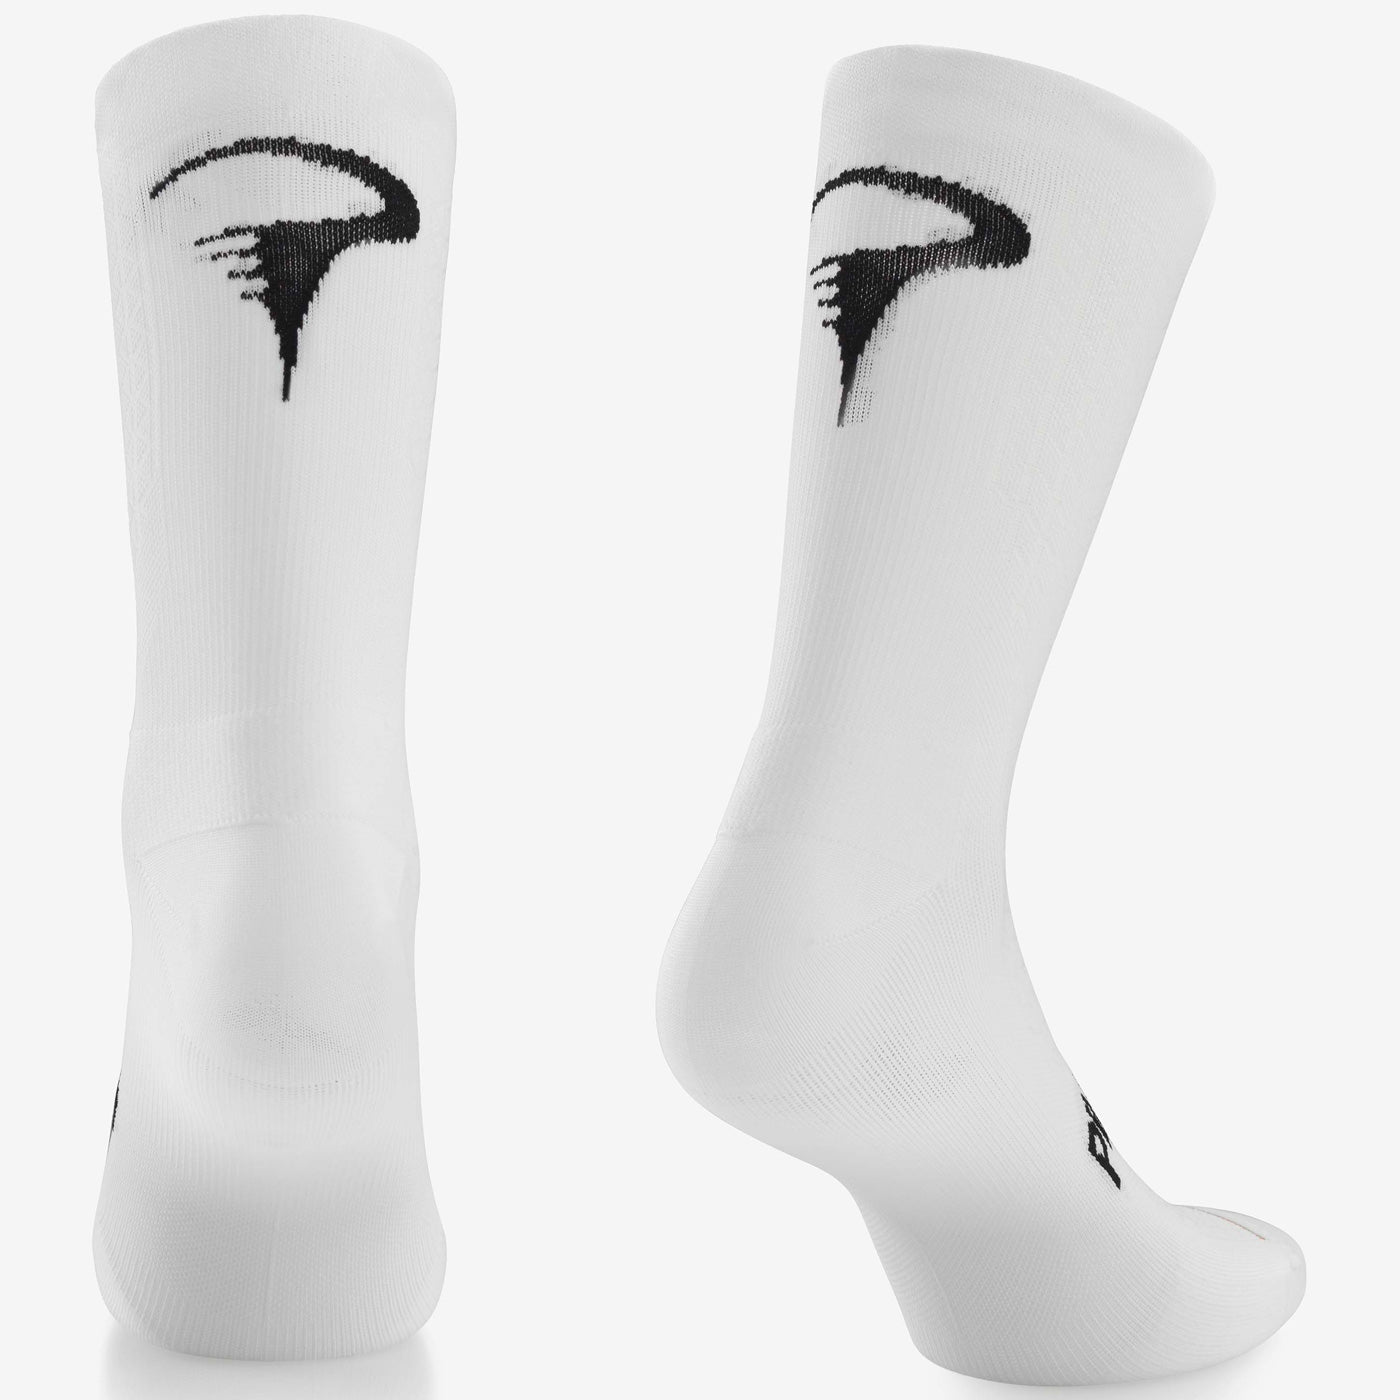 Pinarello Performance socks - White | All4cycling